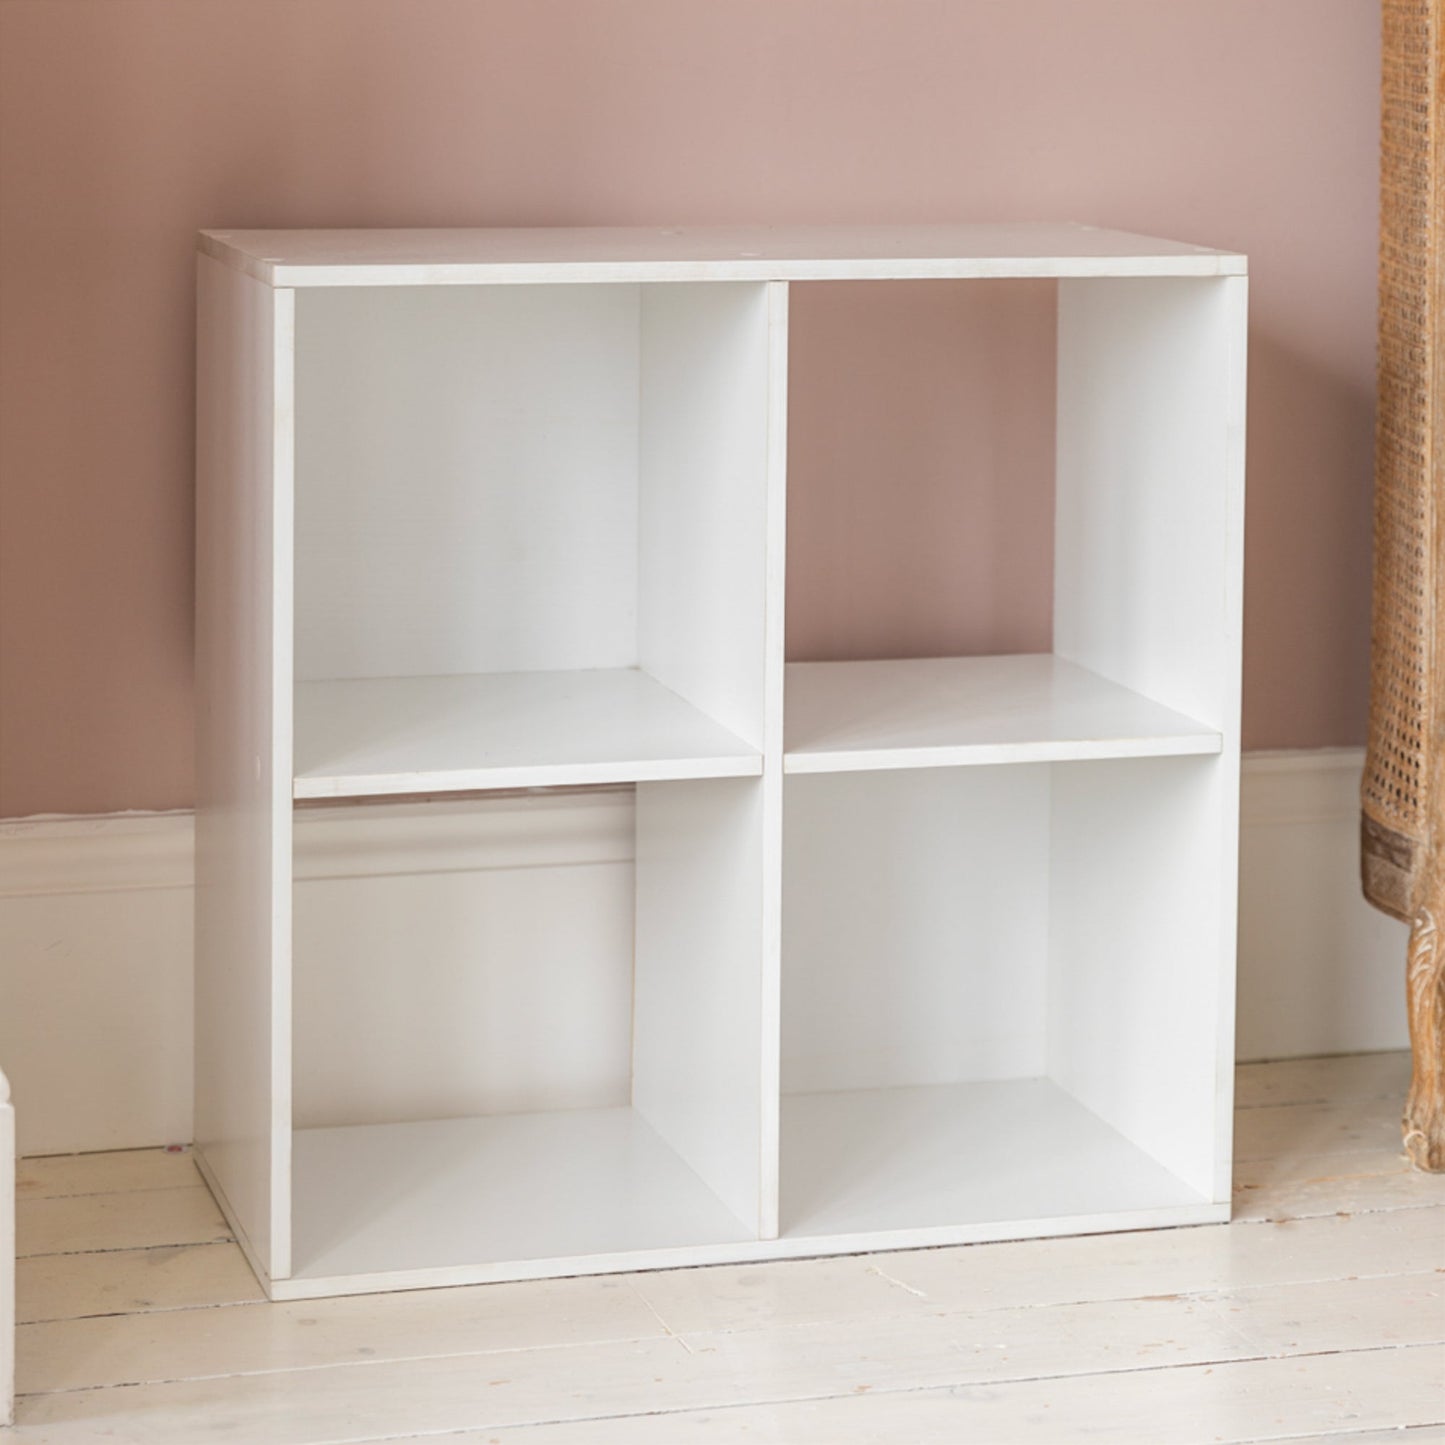 4 Cube White Bookcase Wooden Display Unit Shelving Storage Bookshelf Shelves (No Basket)